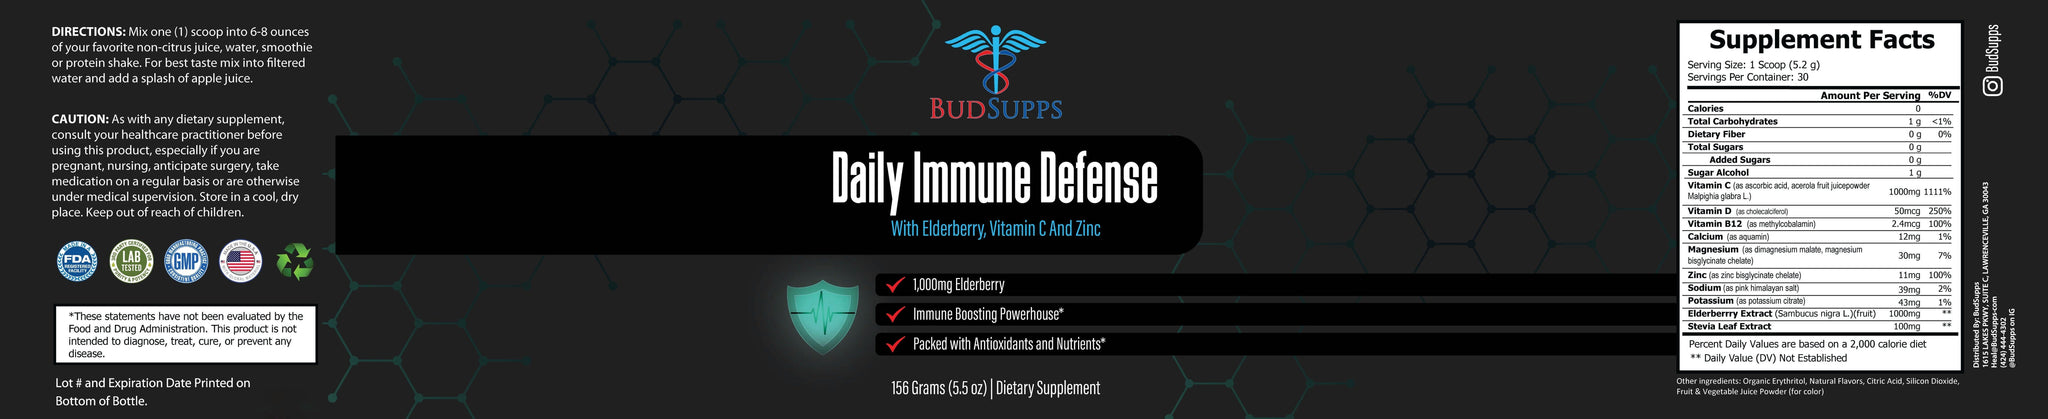 Daily Immune Defense With Elderberry, Vitamin C and Zinc (Powder)